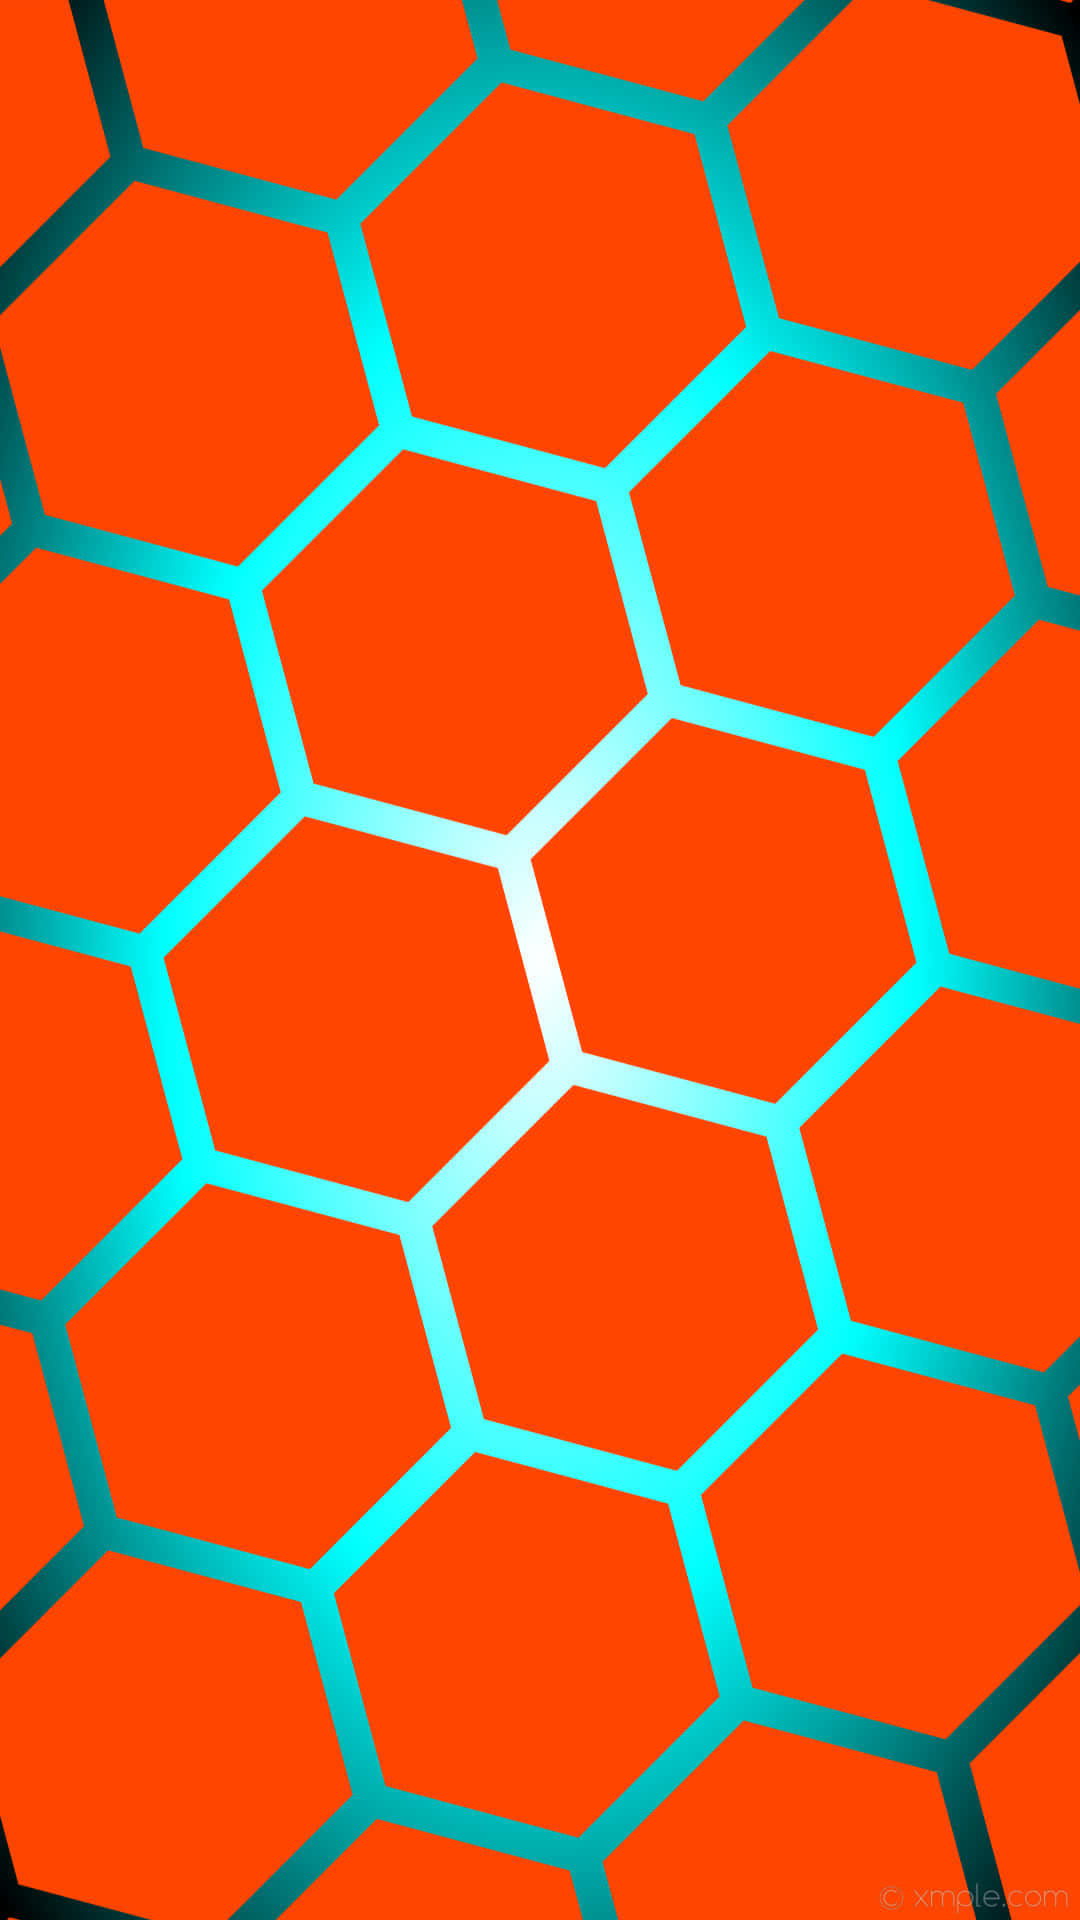 Patrónhexagonal De Color Naranja Y Azul Fondo de pantalla